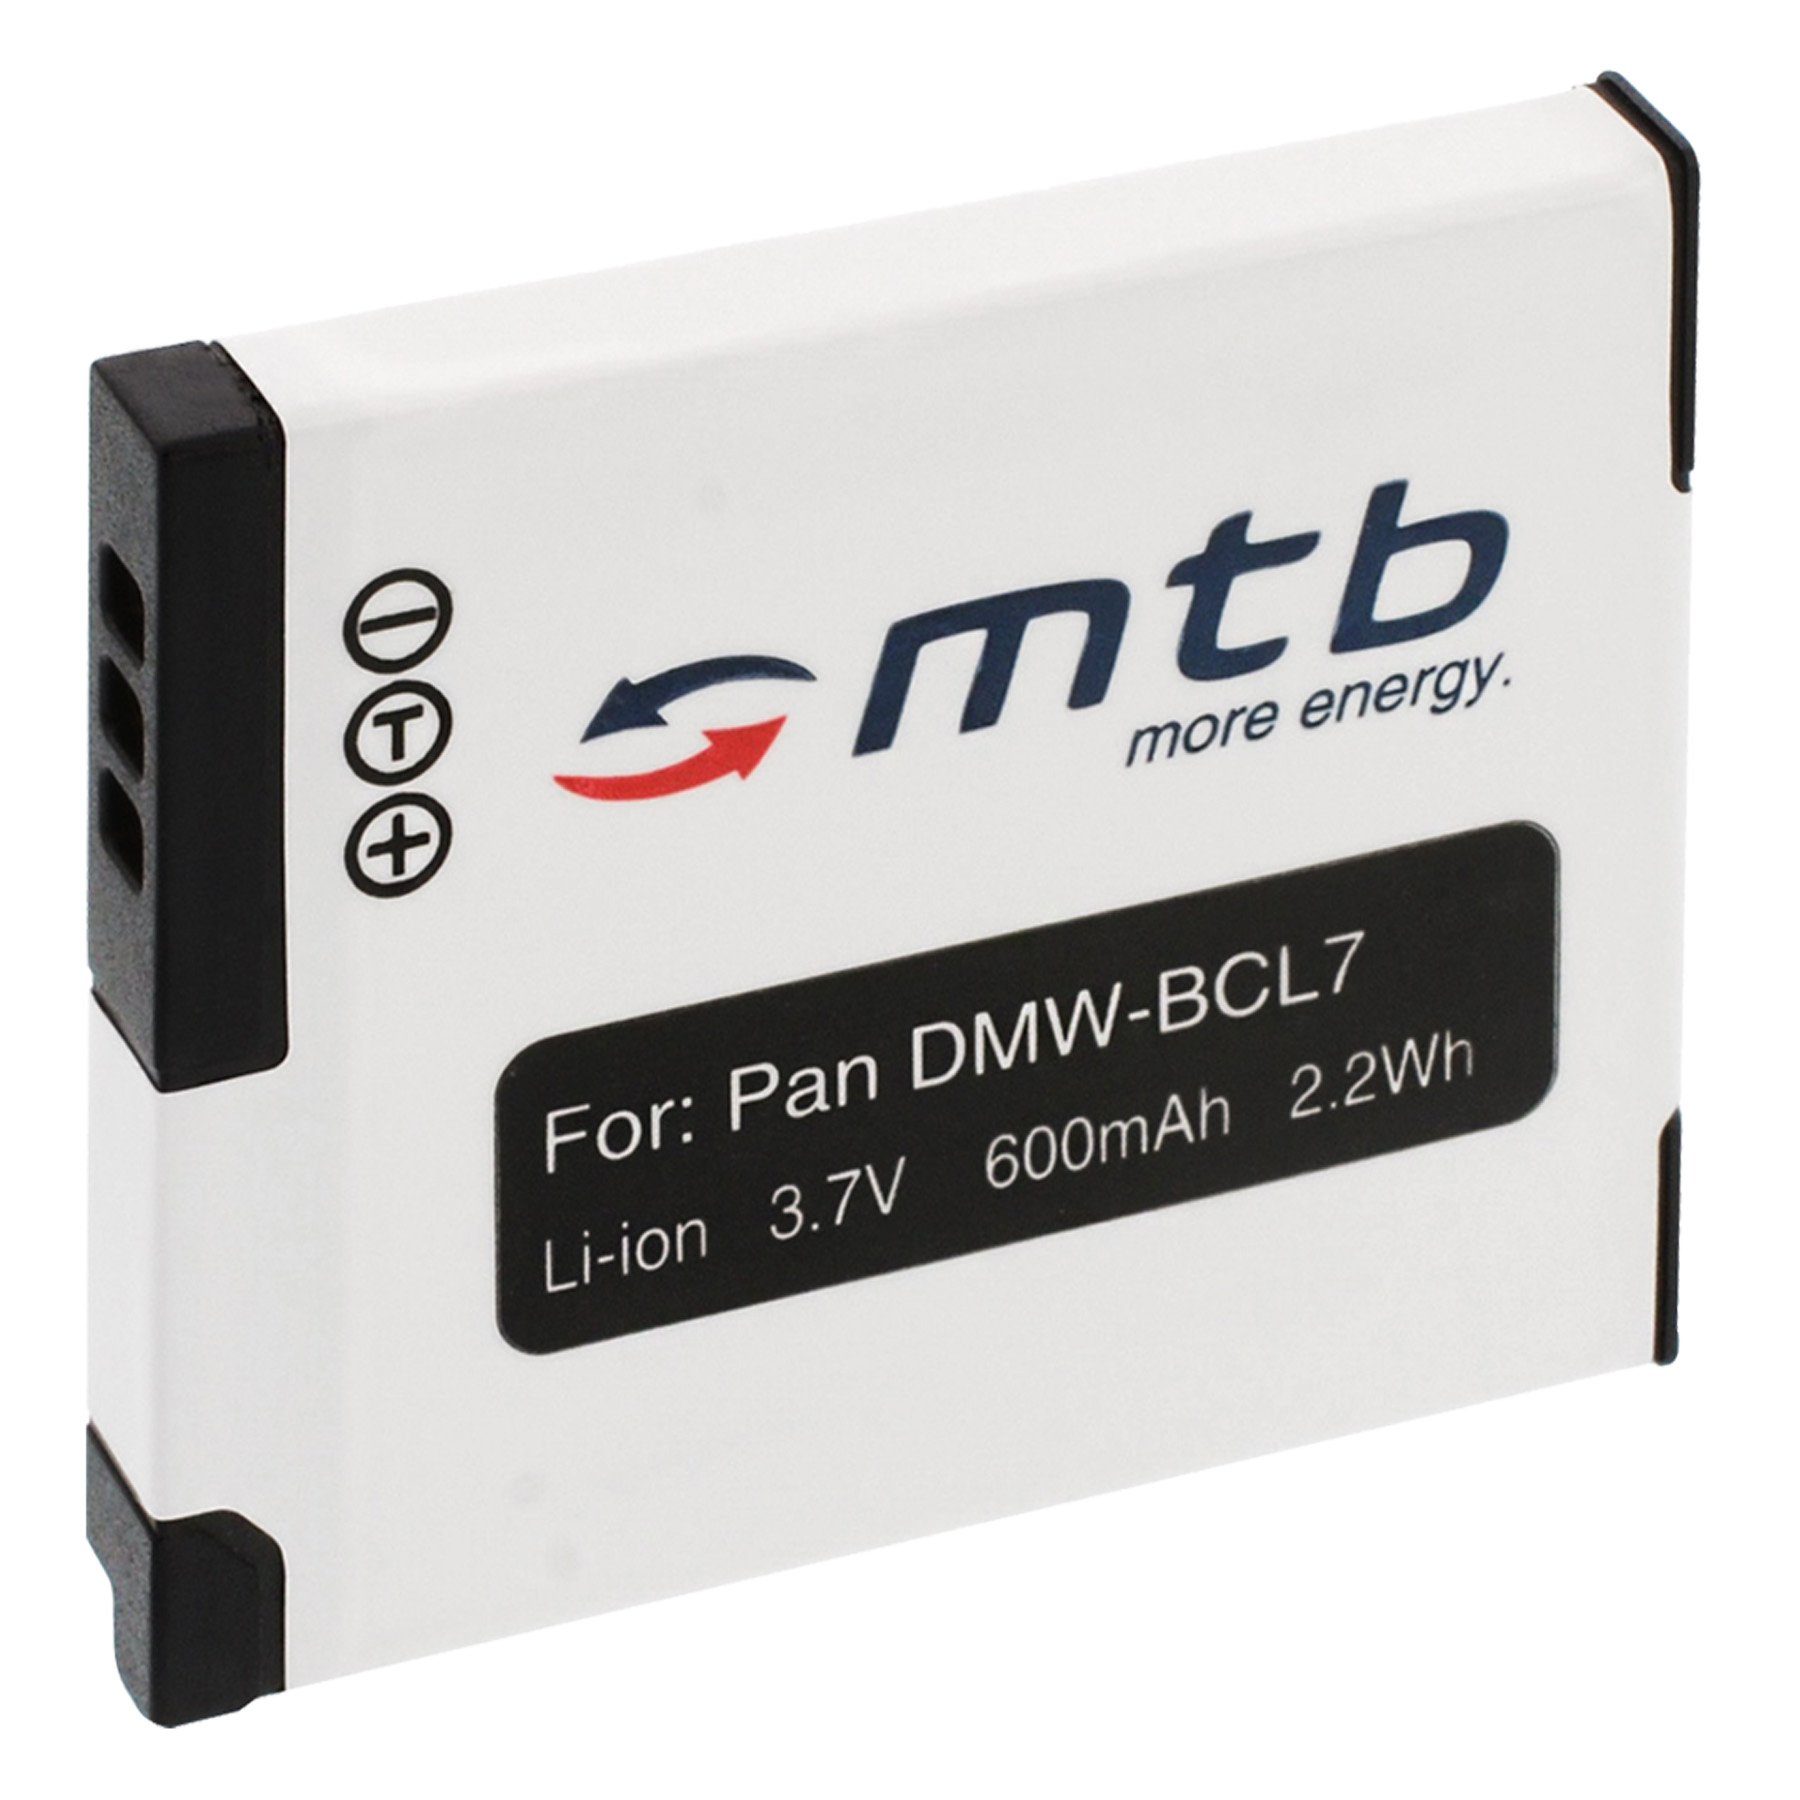 DMC-SZ3, XS3… FH10, Akku-Typ passend (3,7 / Kamera-Akku / FS50 Lumix DMC-XS1, Lumix [BAT-373 mtb SZ8, DMW-BCL7 V), für: 600 Lumix Li-Ion] more Panasonic mit SZ9, Panasonic DMC-F5, - mAh energy kompatibel SZ10